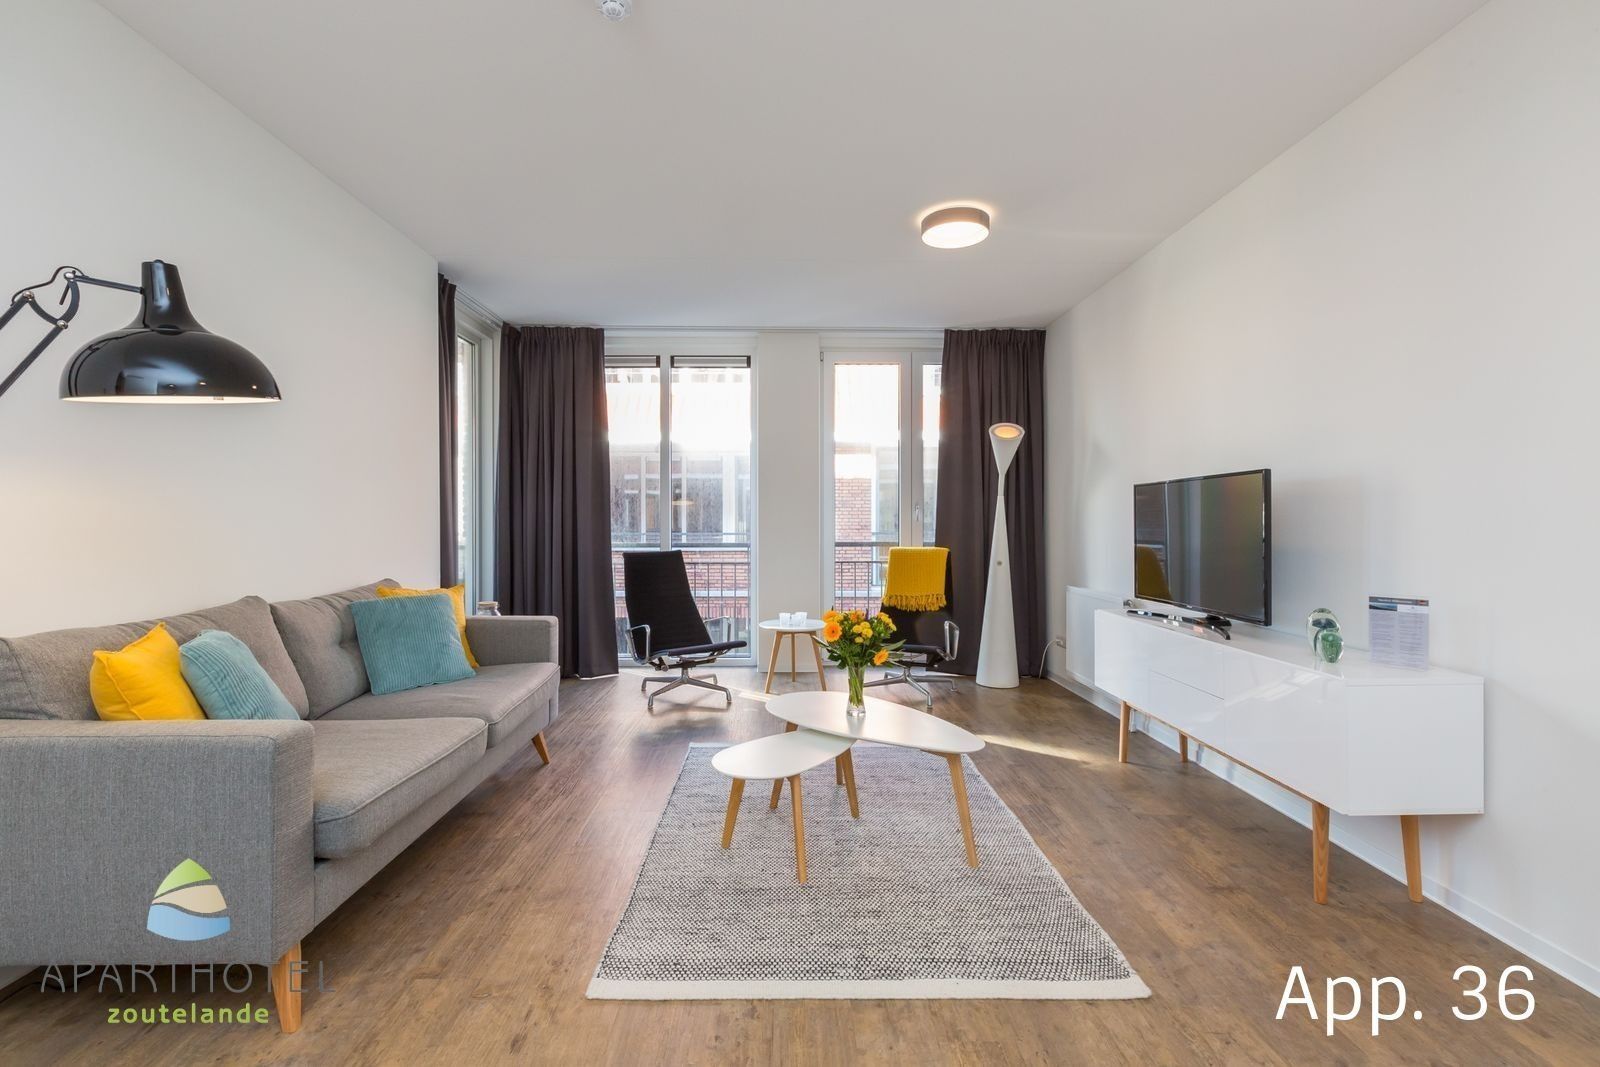 Apartamento Luxury 3-person comfort apartment | Zoutelande Zoutelande 1